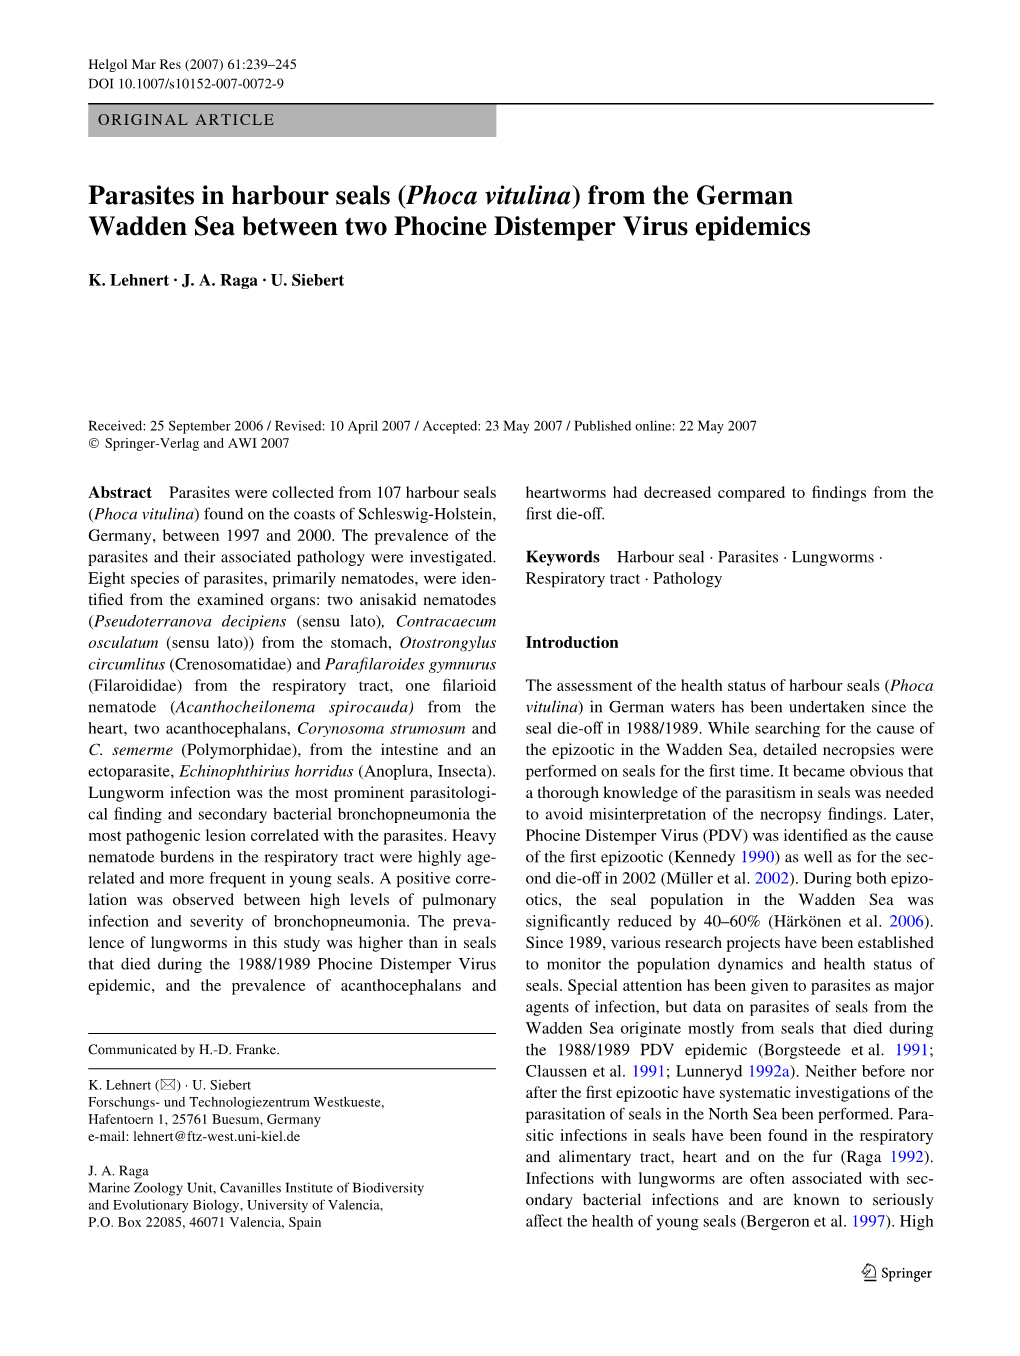 Parasites in Harbour Seals (Phoca Vitulina) from the German Wadden Sea Between Two Phocine Distemper Virus Epidemics